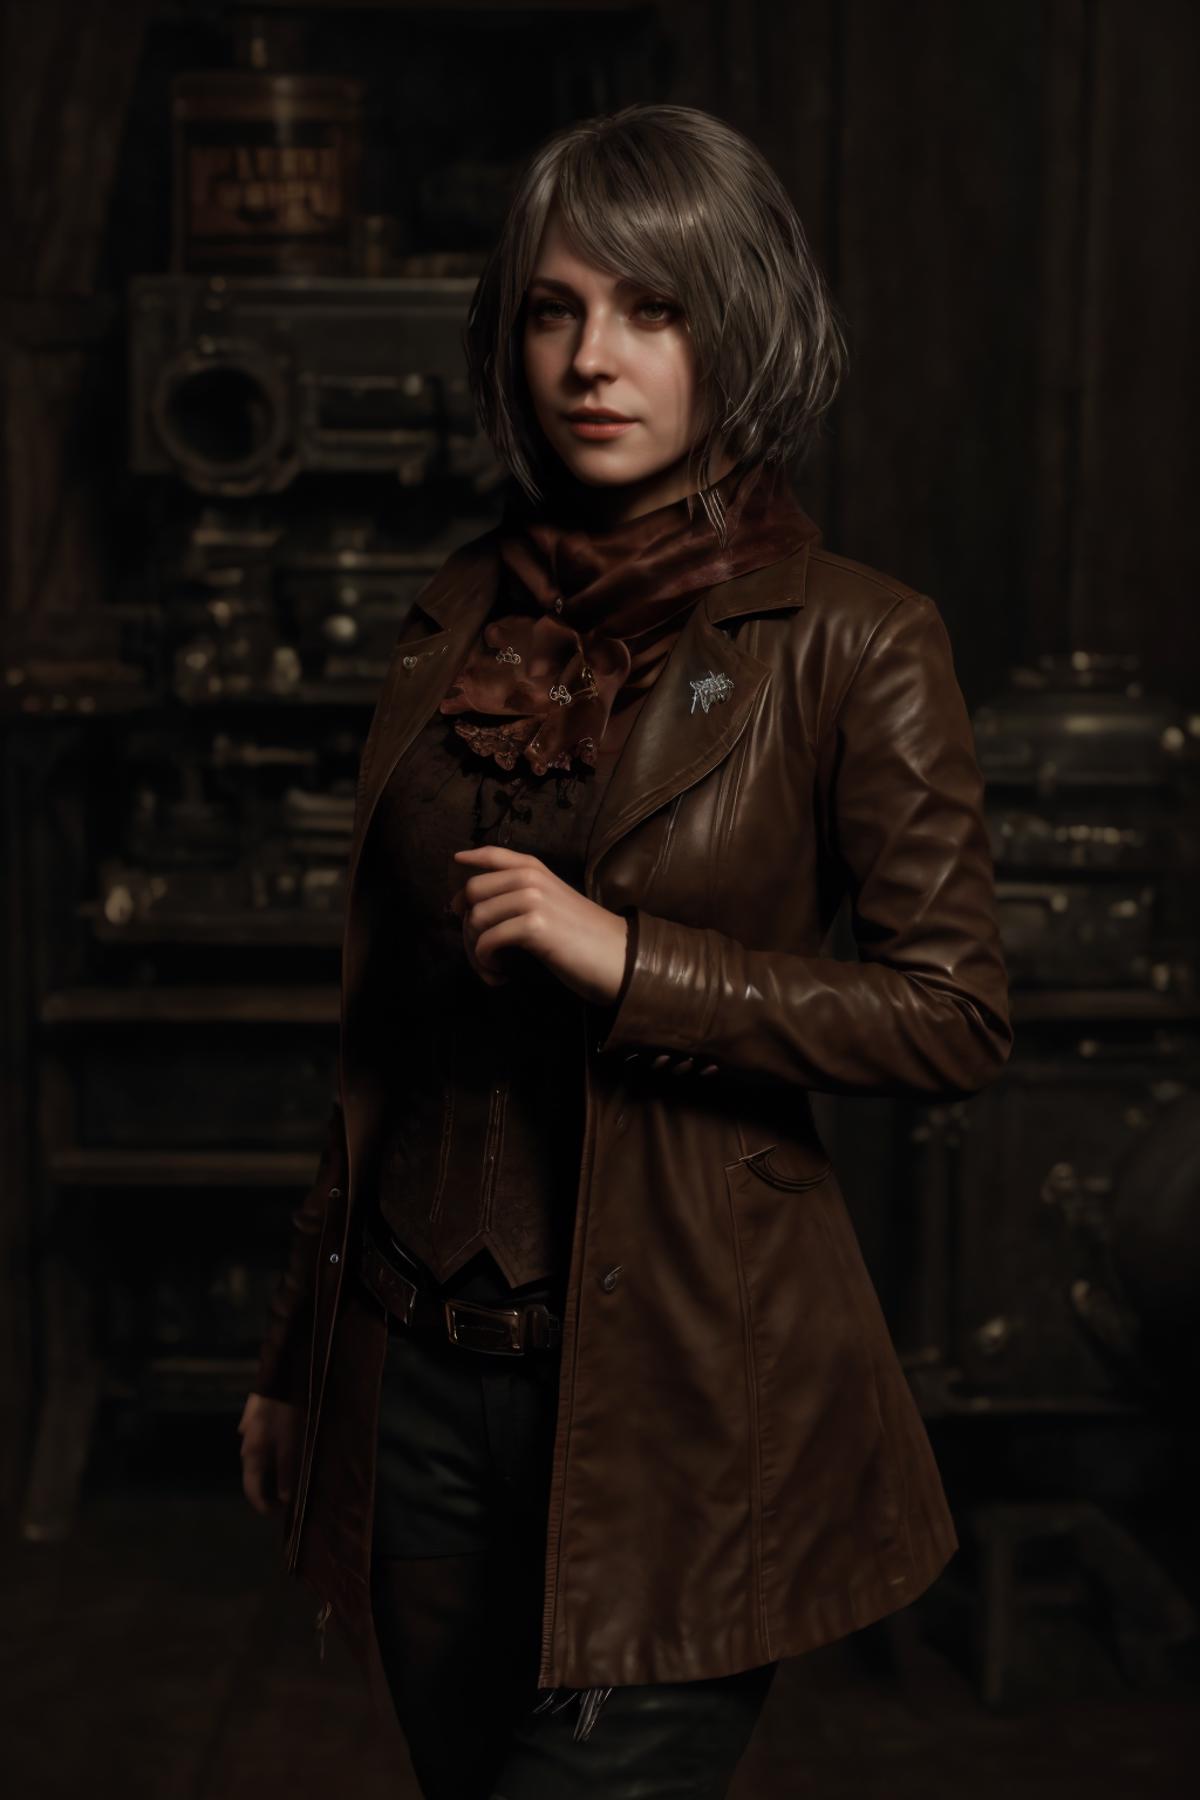 Ashley (Resident Evil 4 Remake) image by dogu_cat